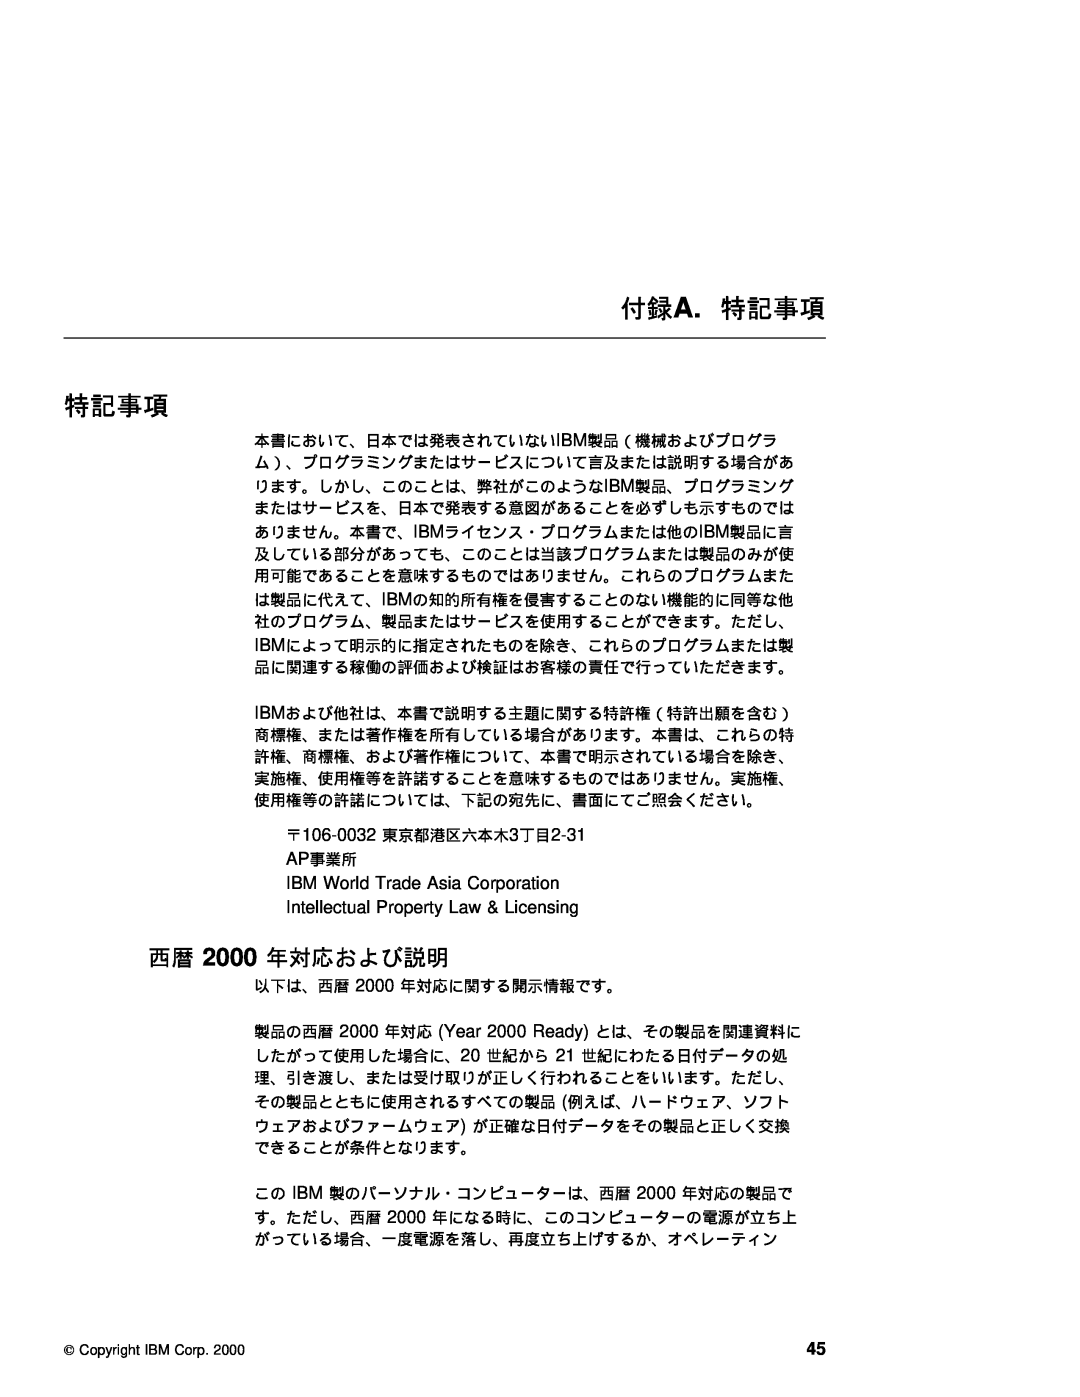 IBM T20 manual 付録a. 特記事項 特記事項, 西暦 2000 年対応および説明 